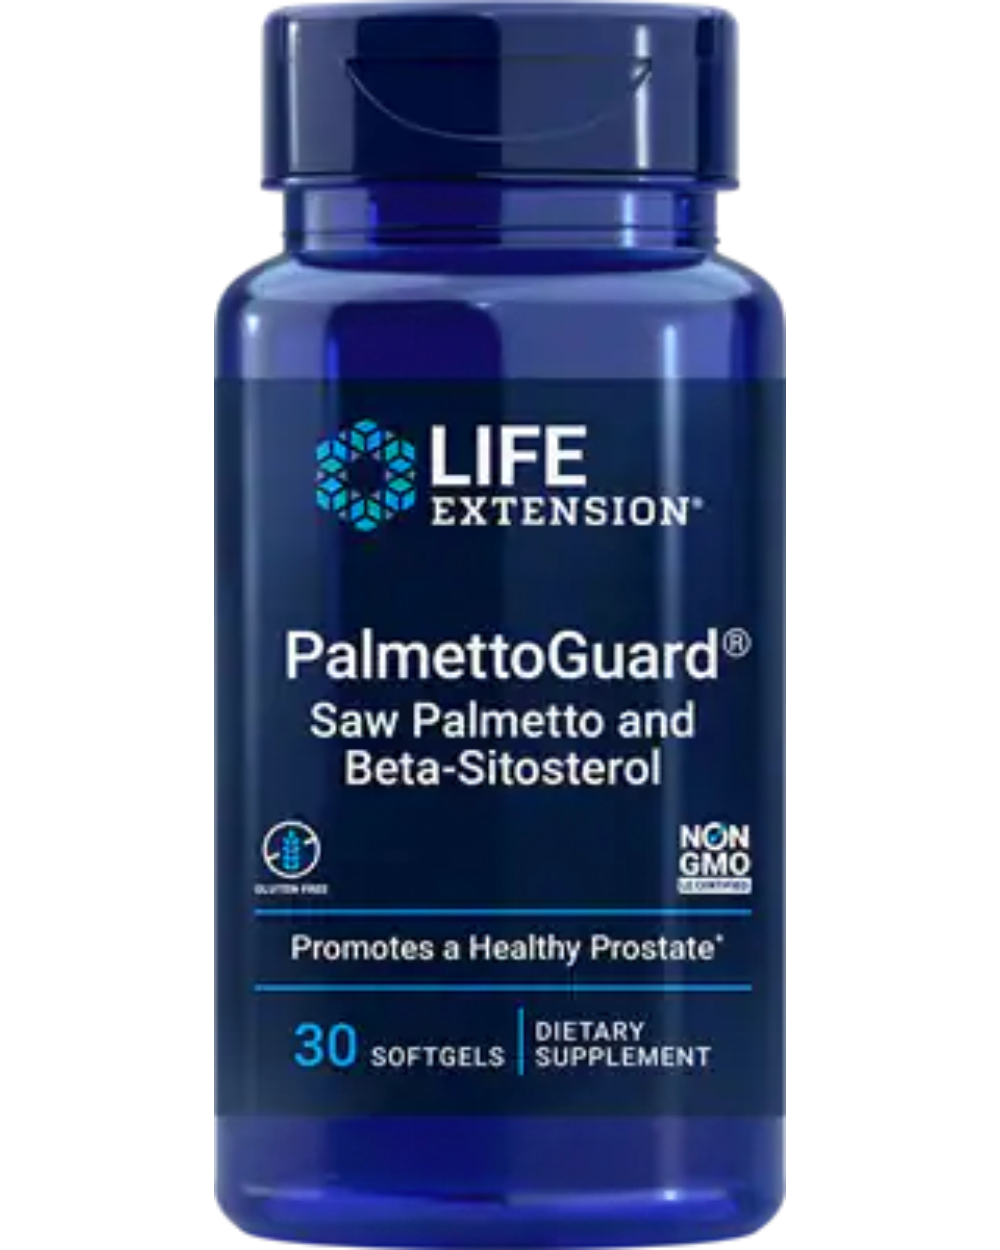 PalmettoGuard Saw Palmetto with Beta-Sitosterol